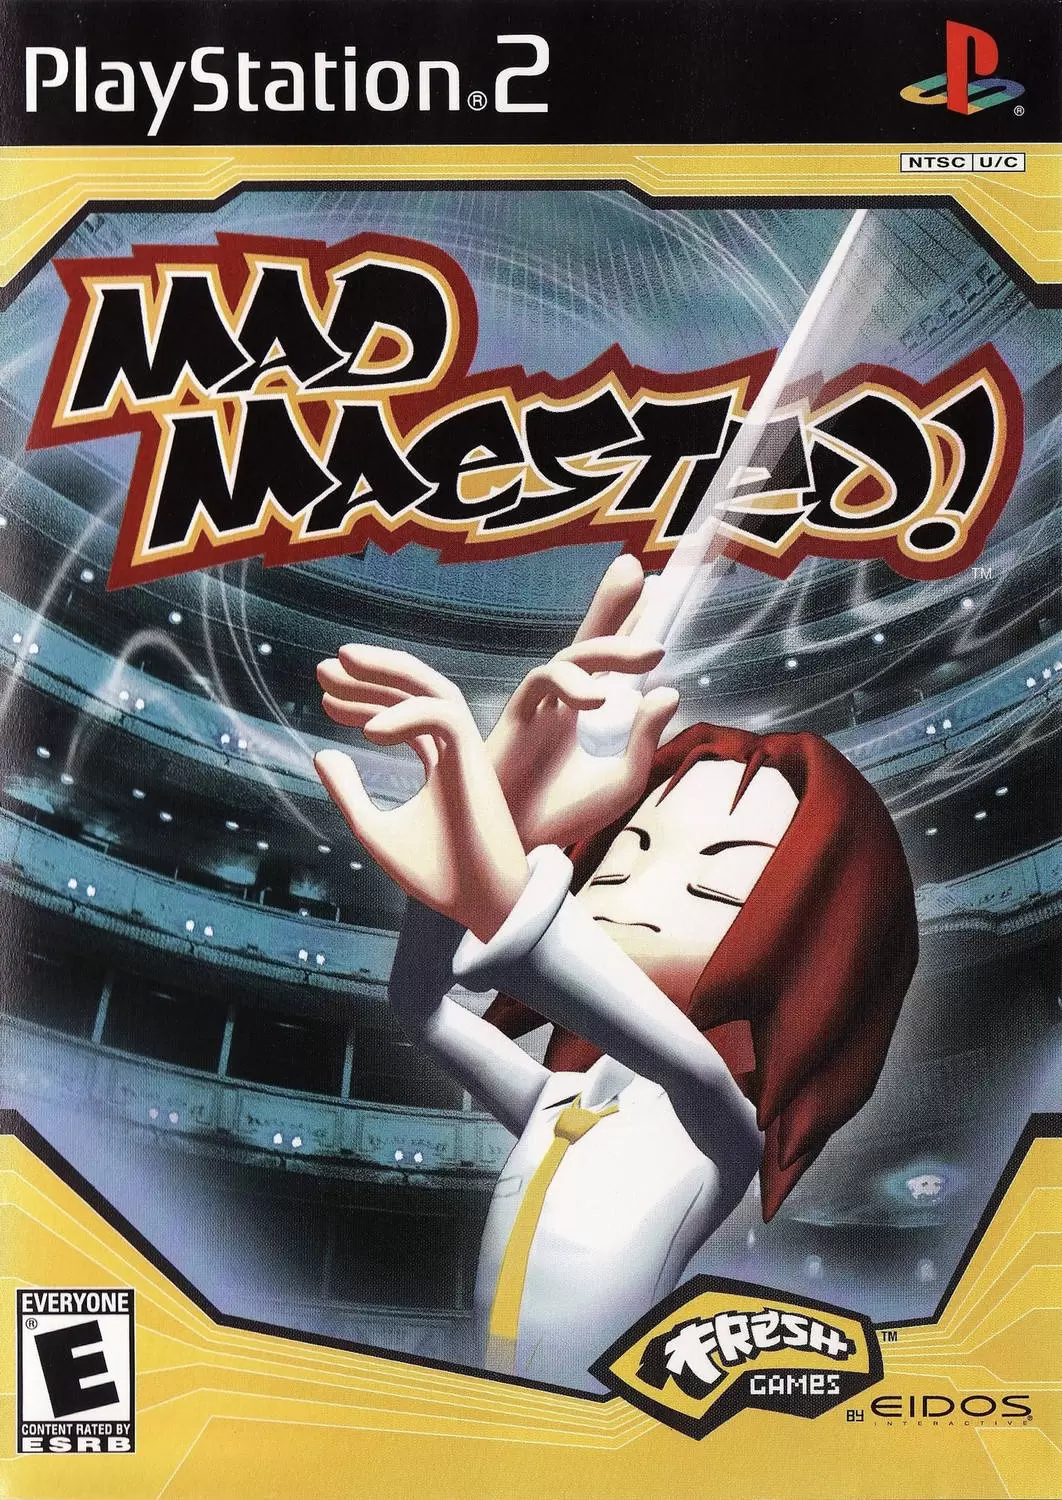 PS2 Games - Mad Maestro!